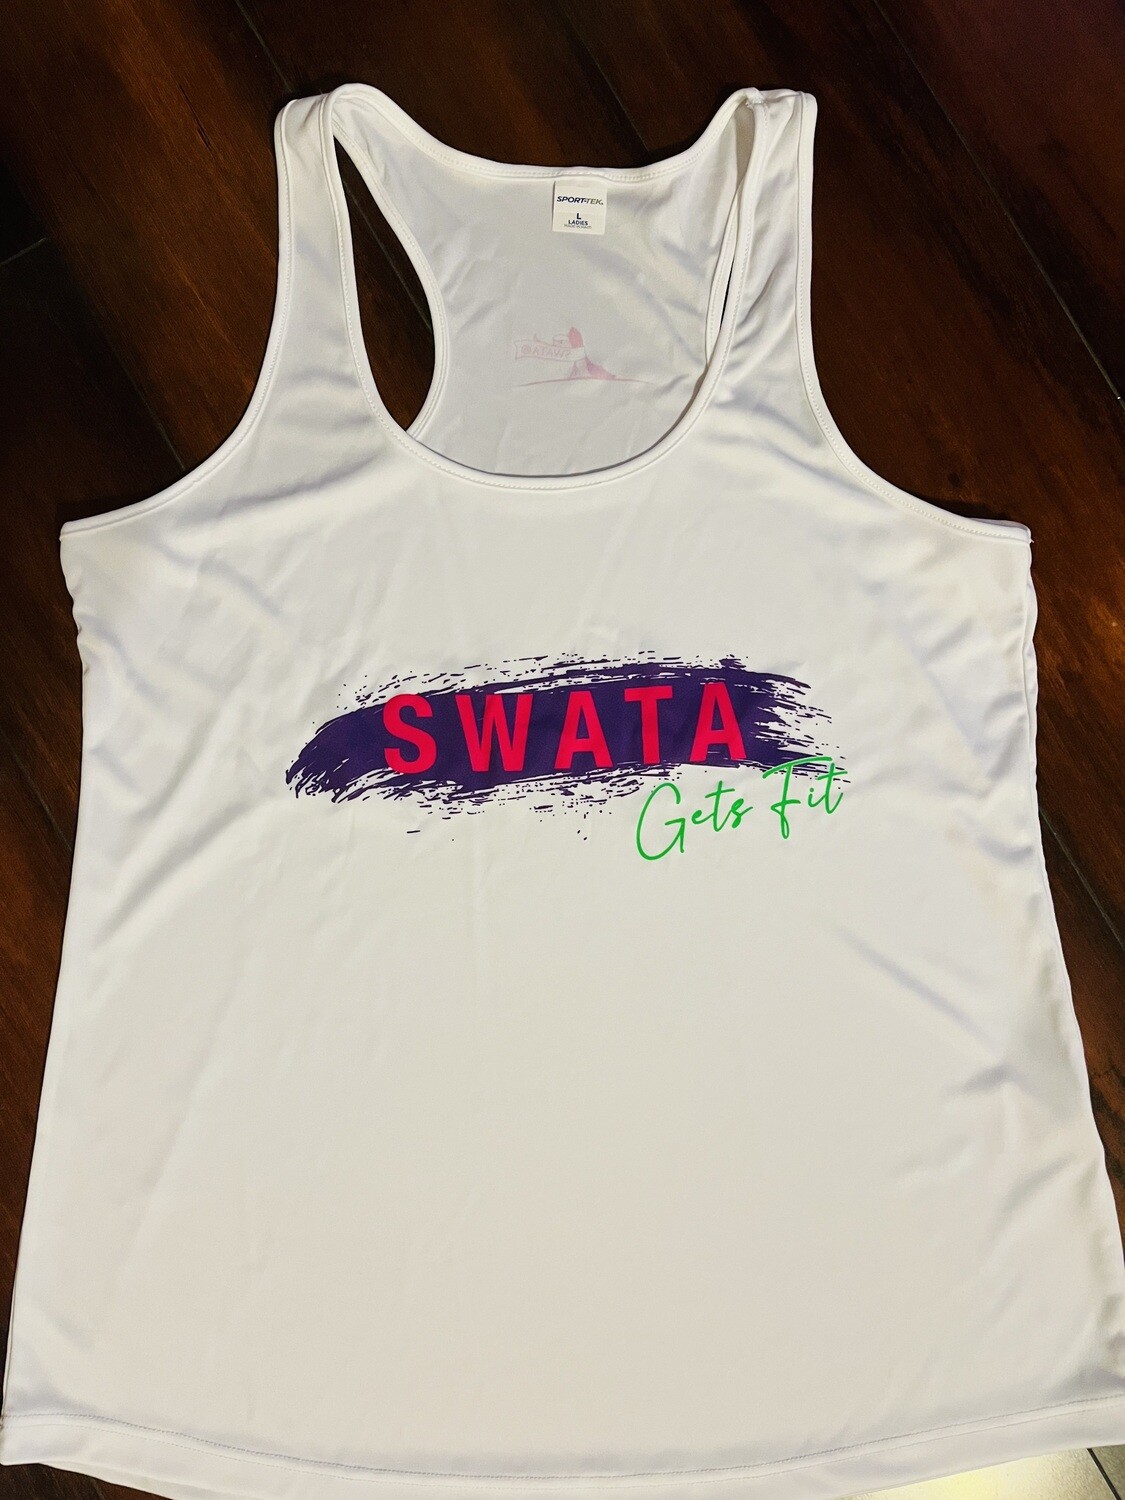 SWATA Gets Fit Shirt (White)